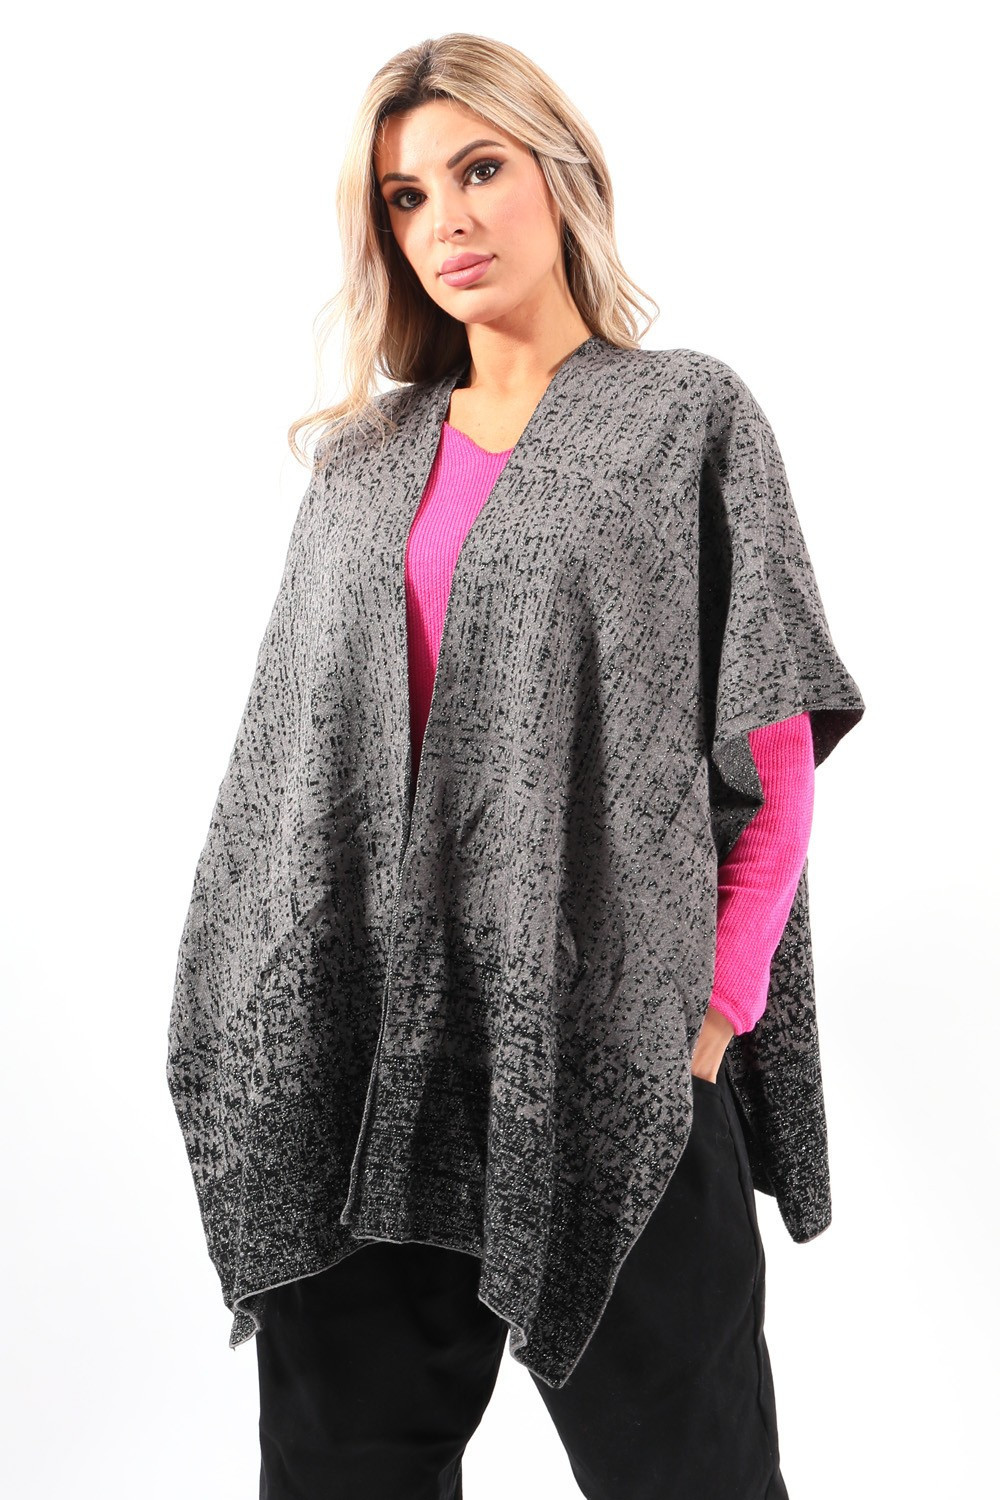 Glittery gray shawl